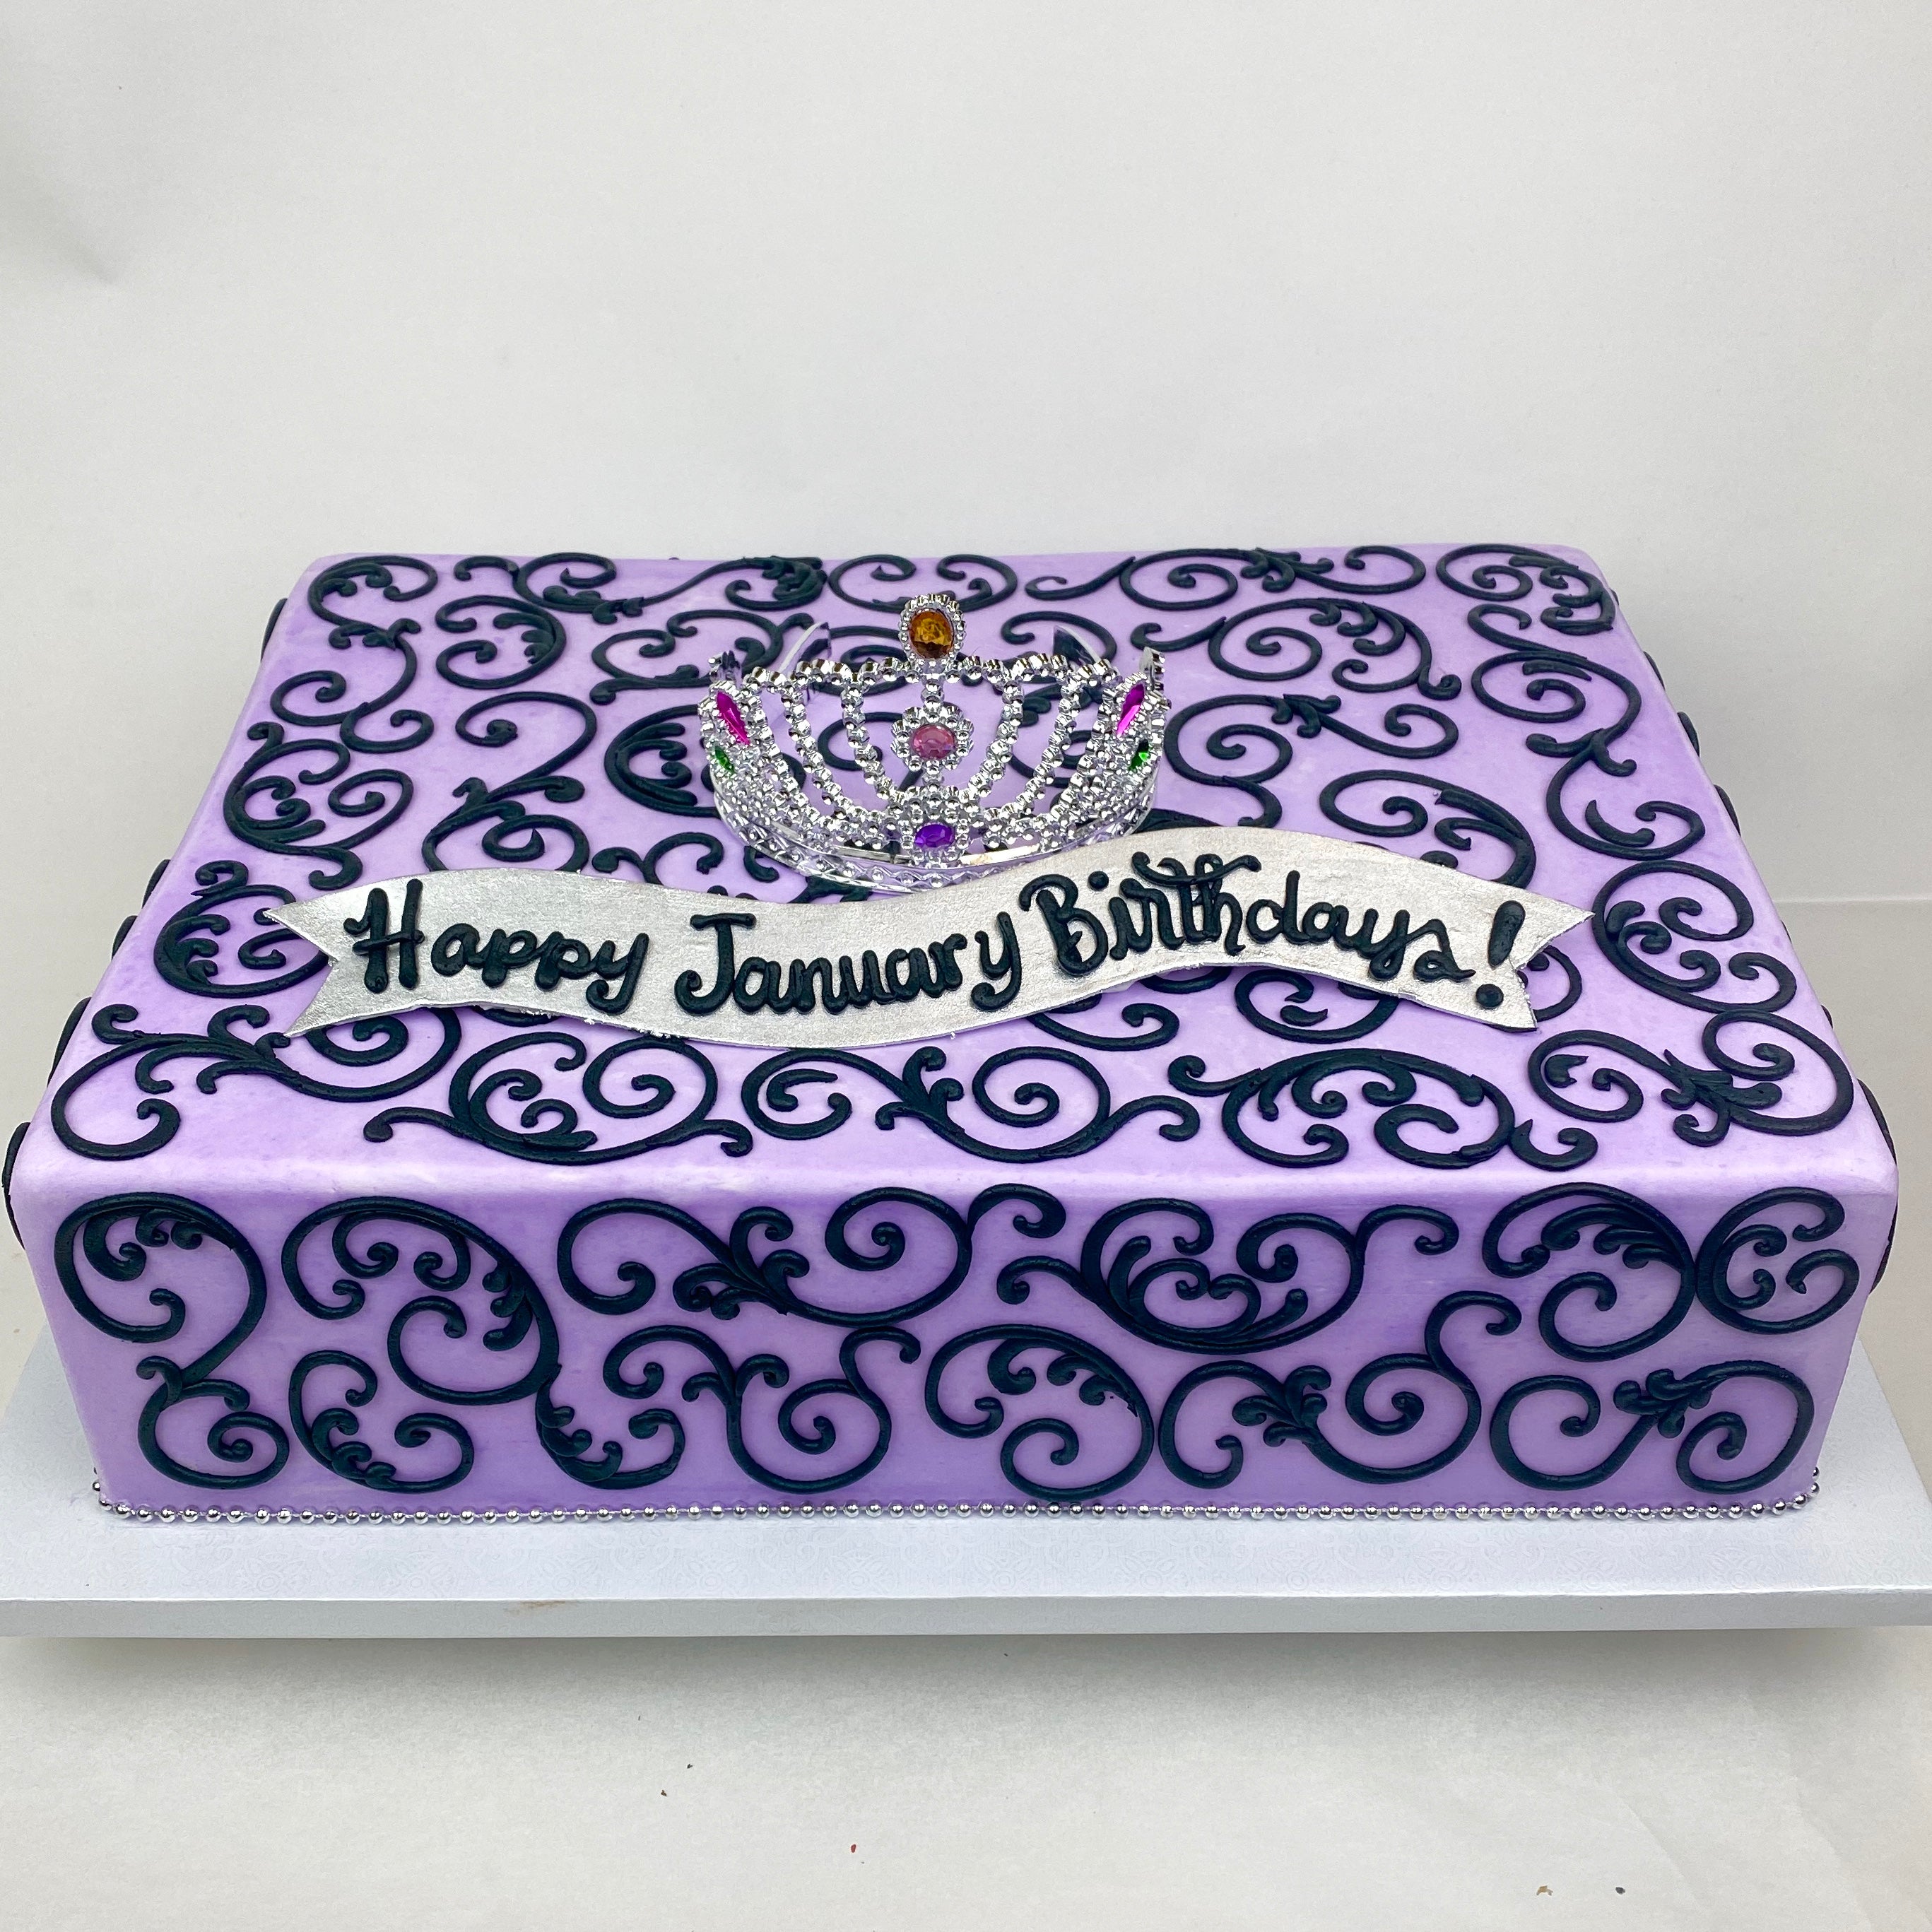 18th birthday sheet cakes for girls